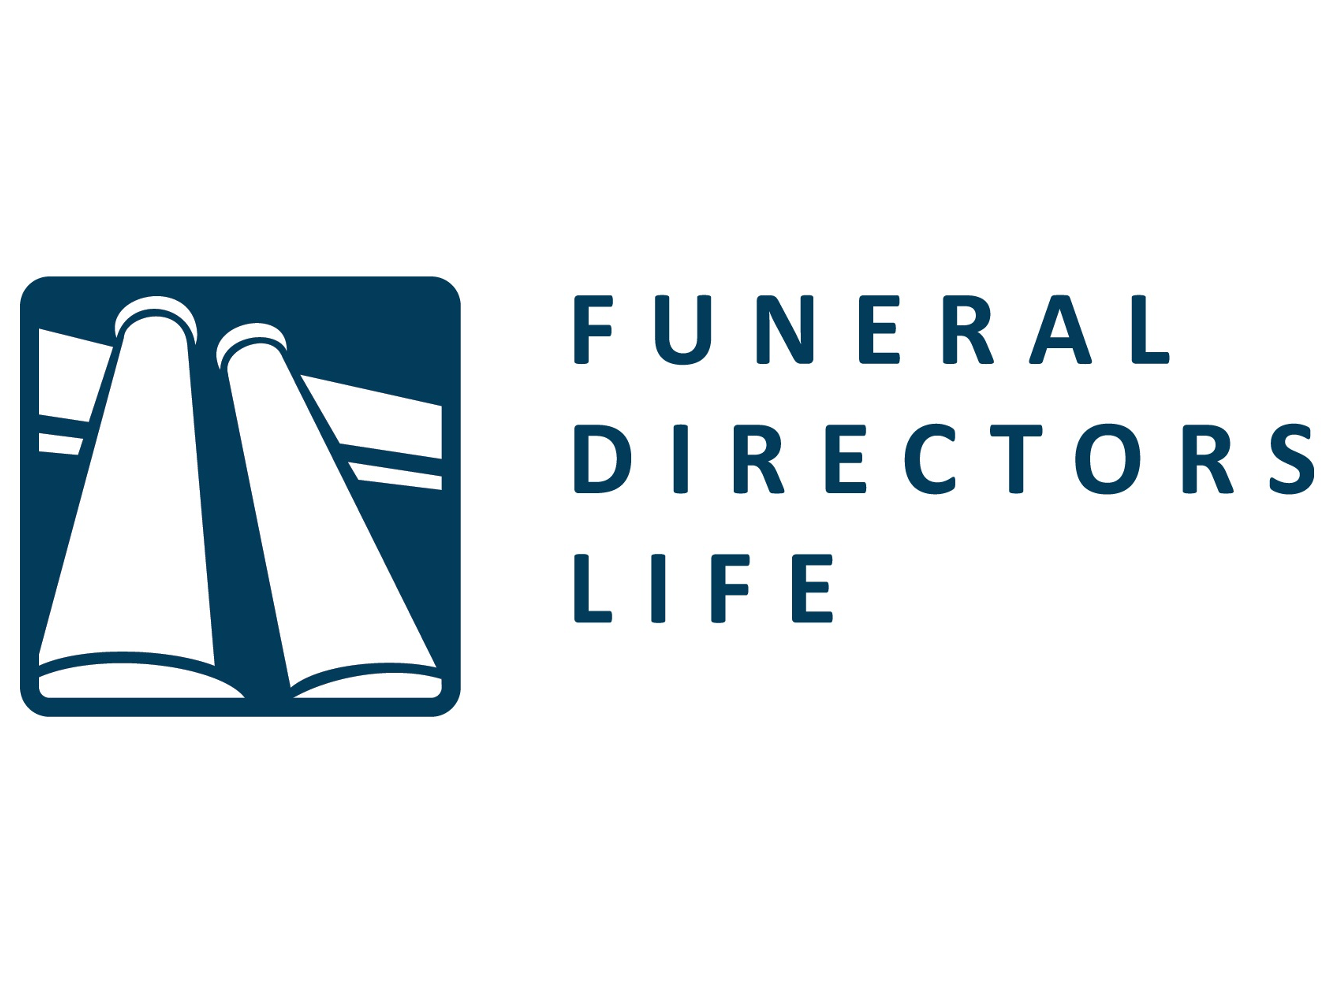 Funeral Directors Life Insurance Company